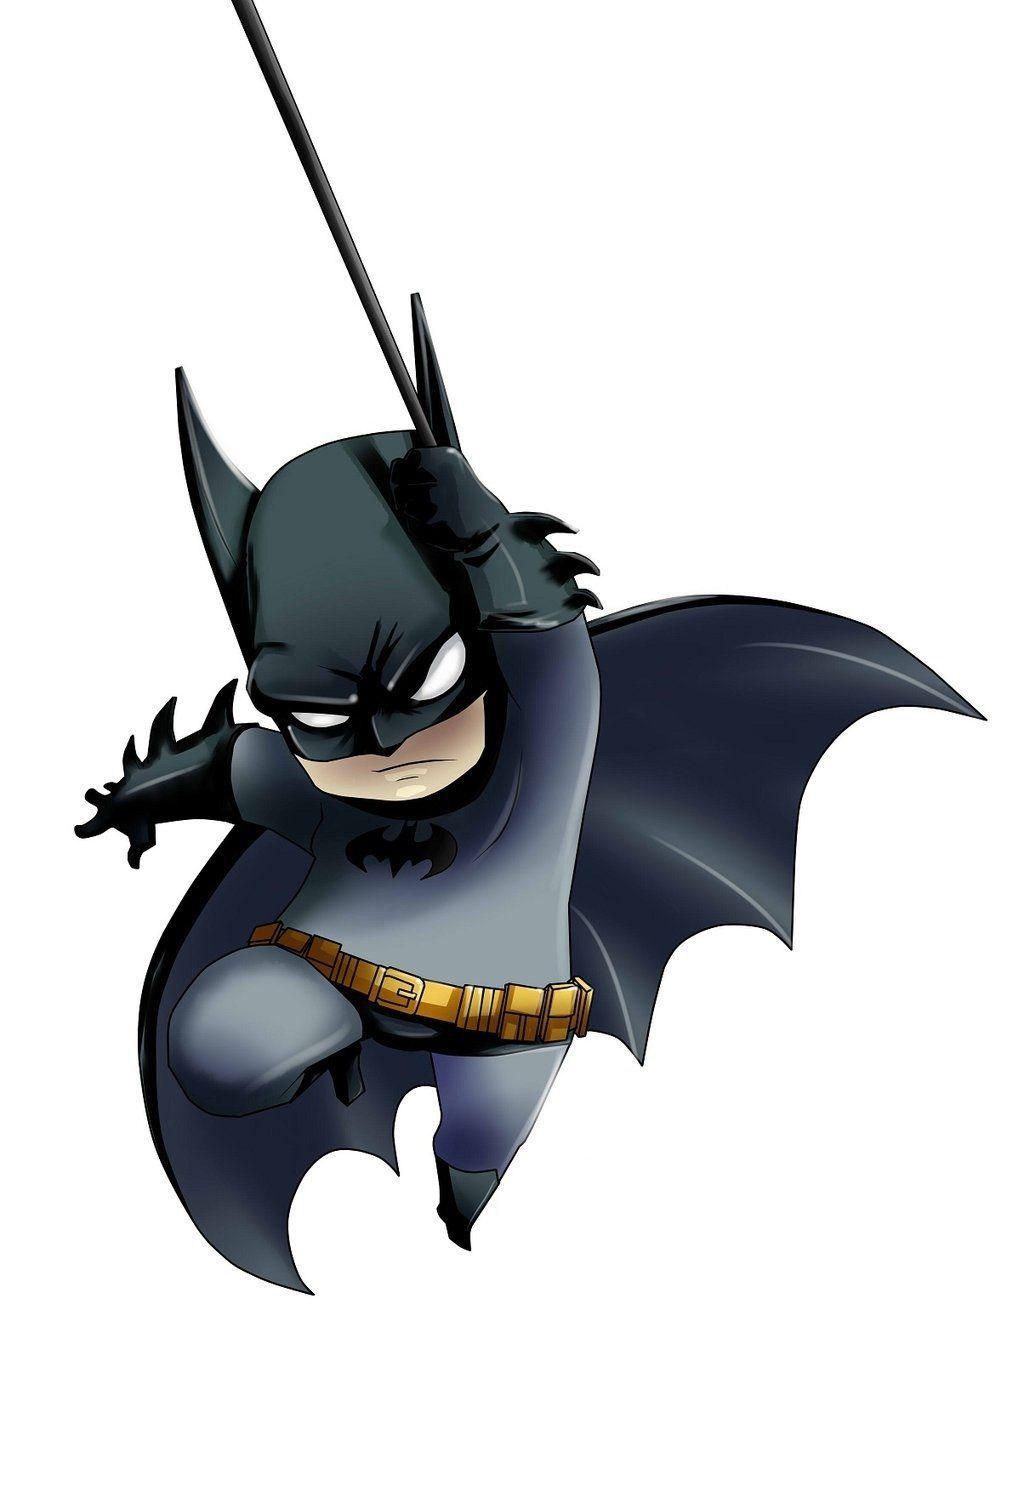 Chibi Bat Logo - Mini Batman lol | Random | Pinterest | Batman, Batman chibi and Chibi